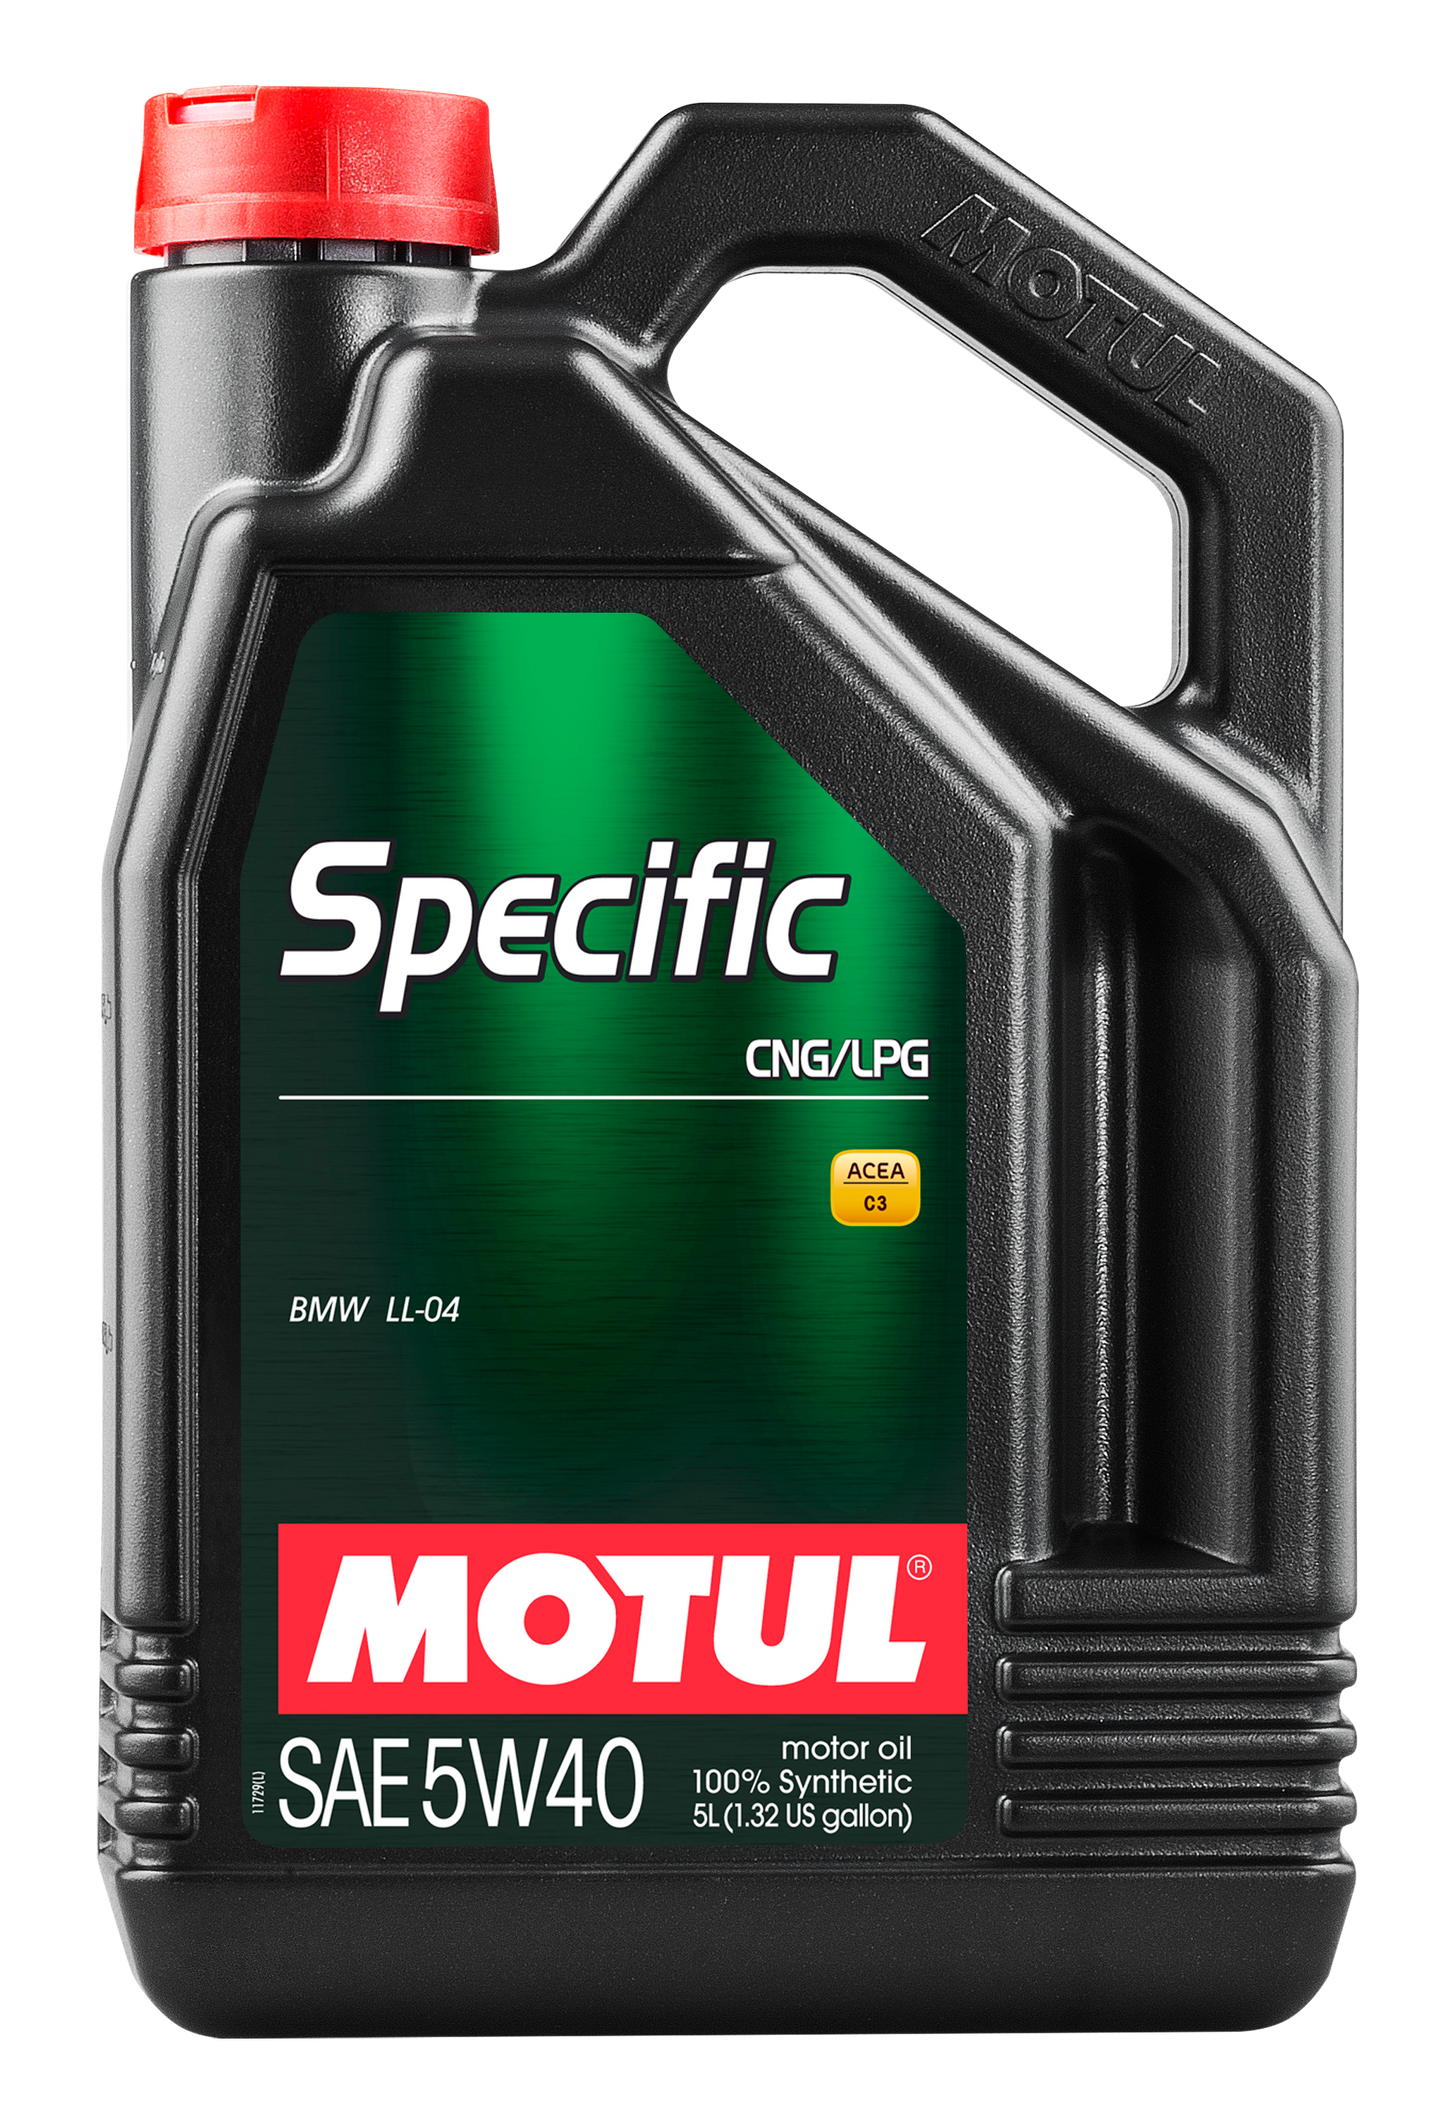 Motul SPECIFIC CNG/LPG 5W-40, 5 liter